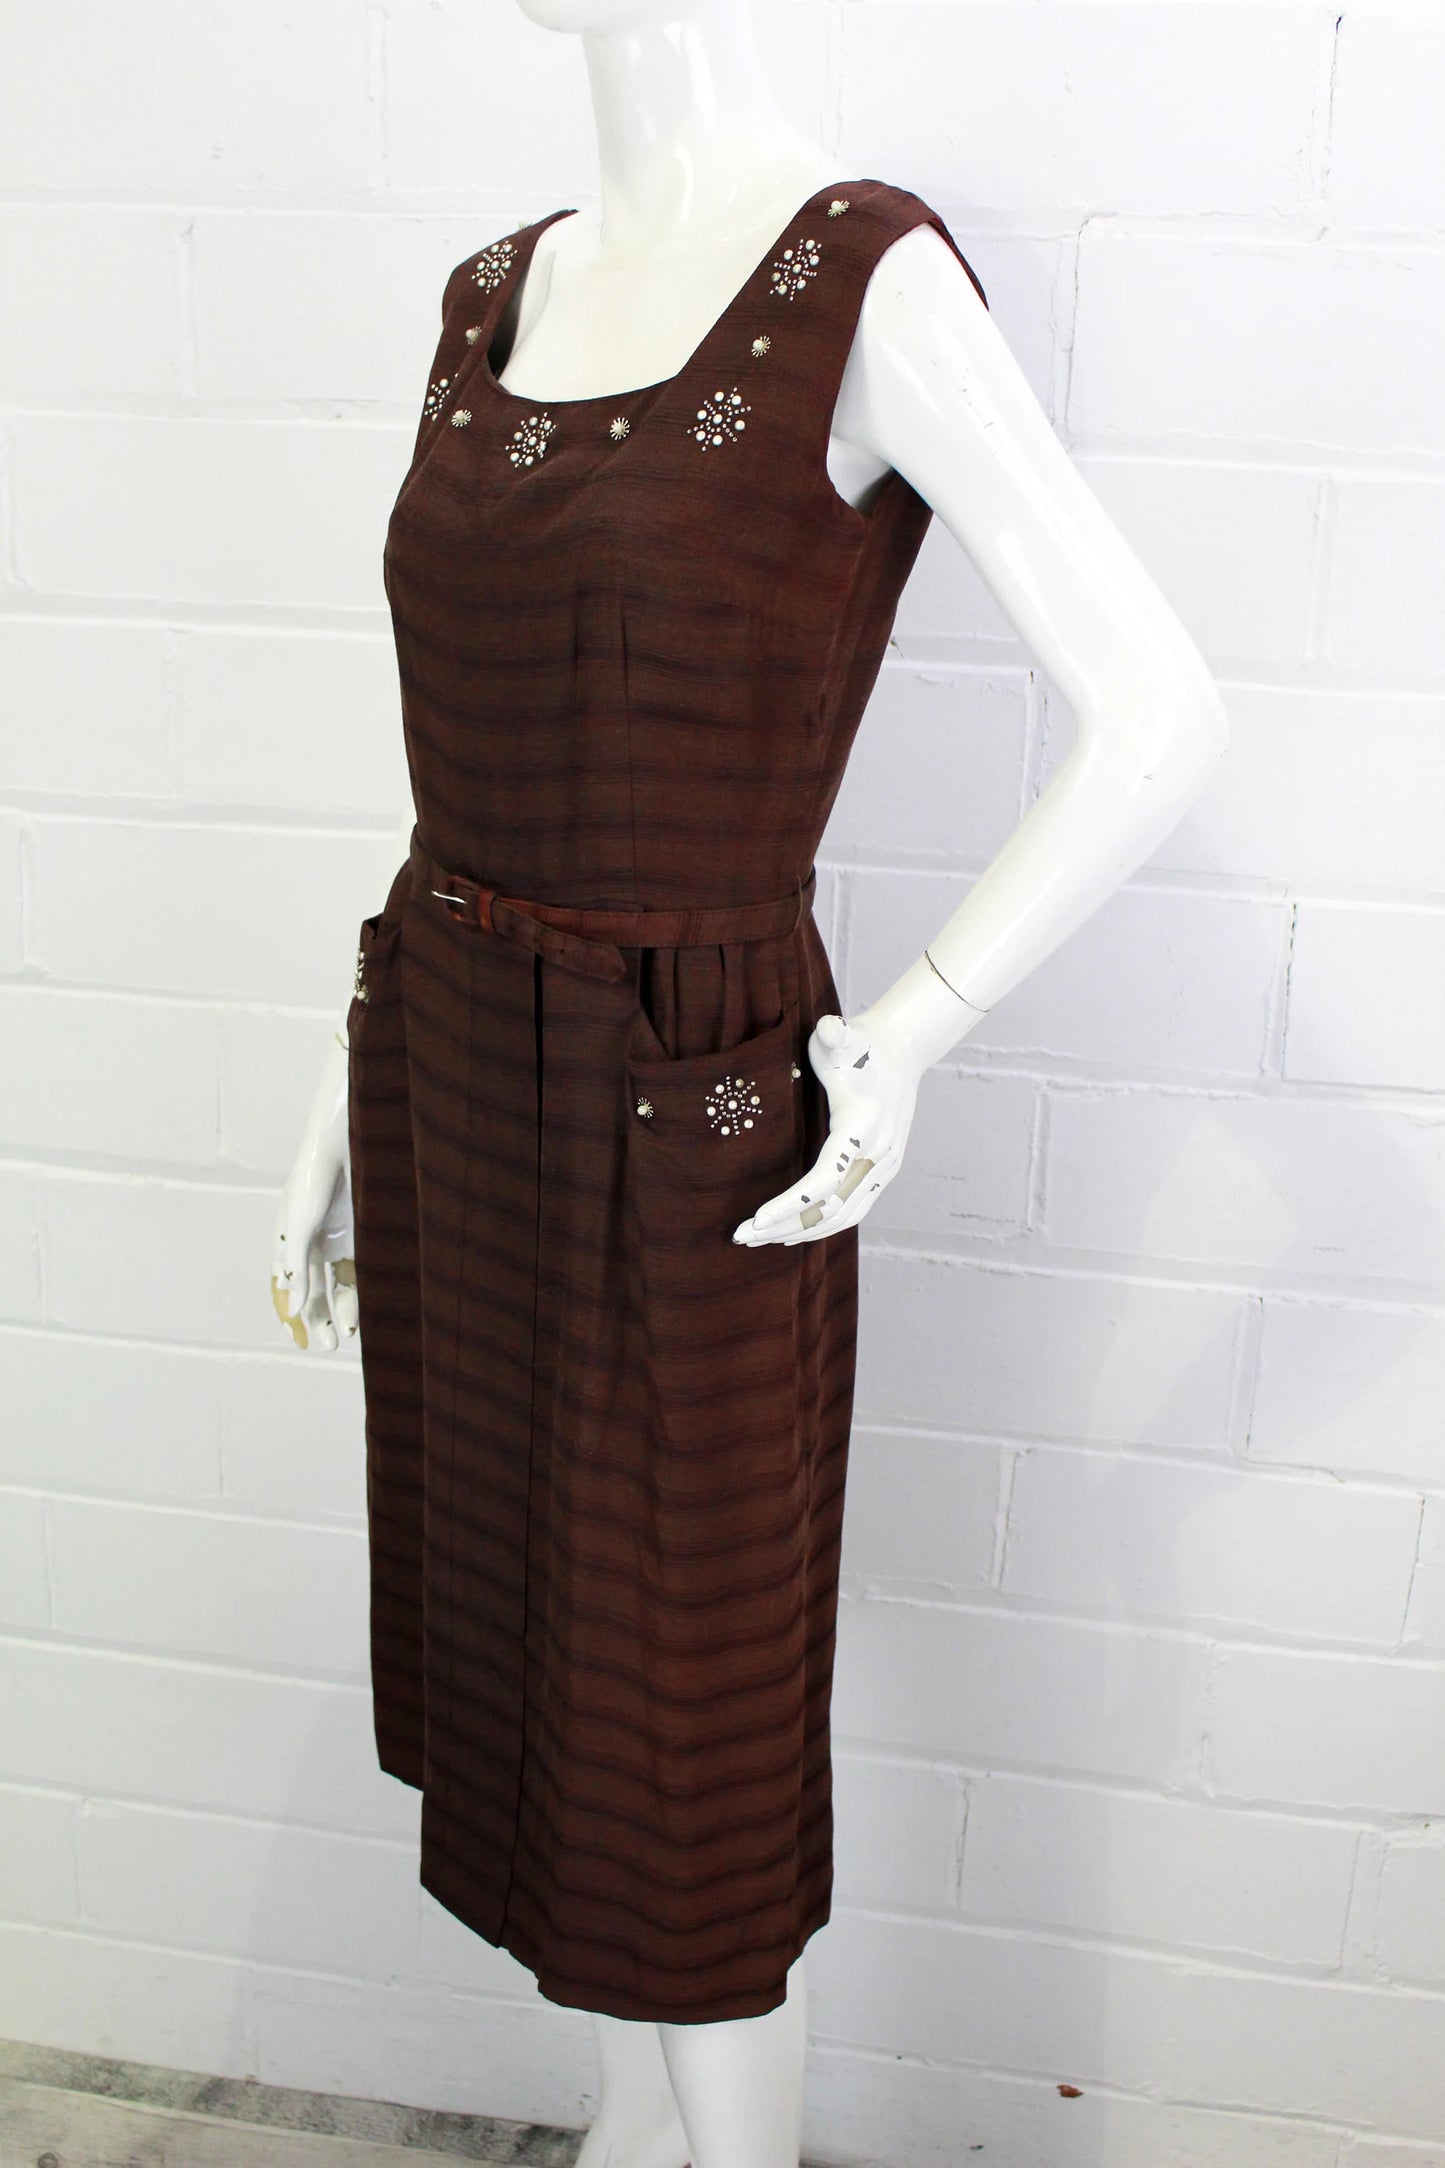 1950s Brown Dress and Jacket with Beaded Details, Short Sleeve Bolero Jacket, Vintage 50s Sheath Dress, Bust 36 in. Medium